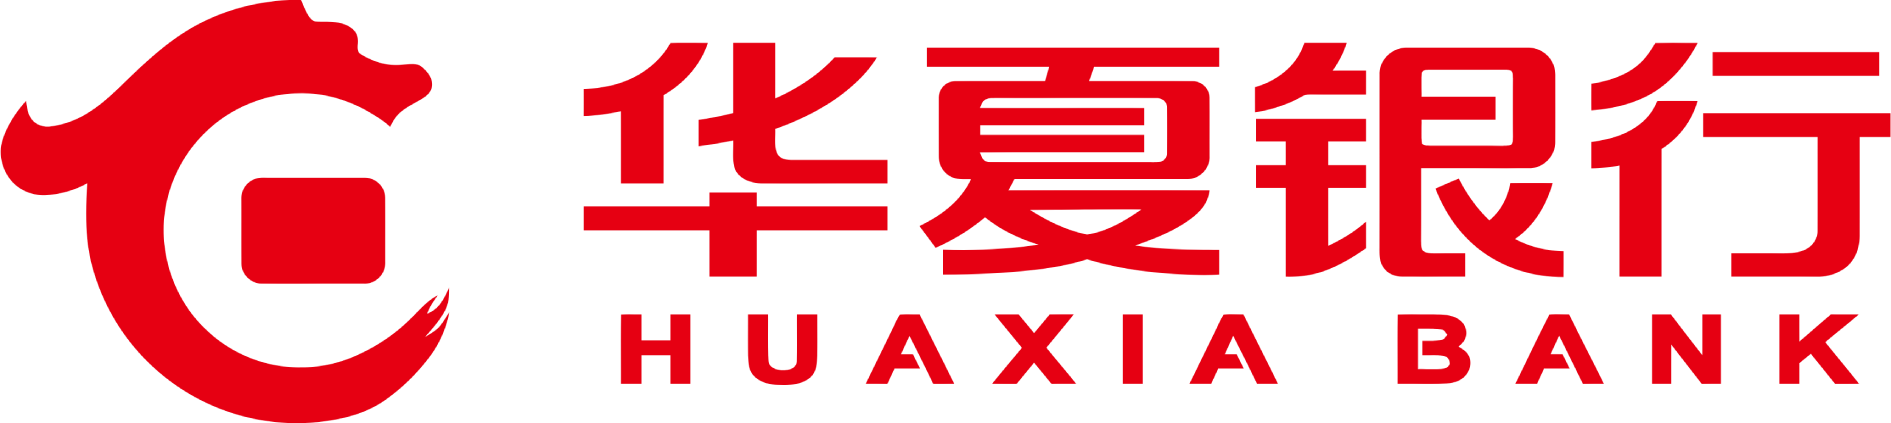 Hunchun rural commercial bank co ltd. Логотип банка Huaxia. Китайские логотипы банков. China CITIC Bank офис в Пекине. Бэйхай банк лого.